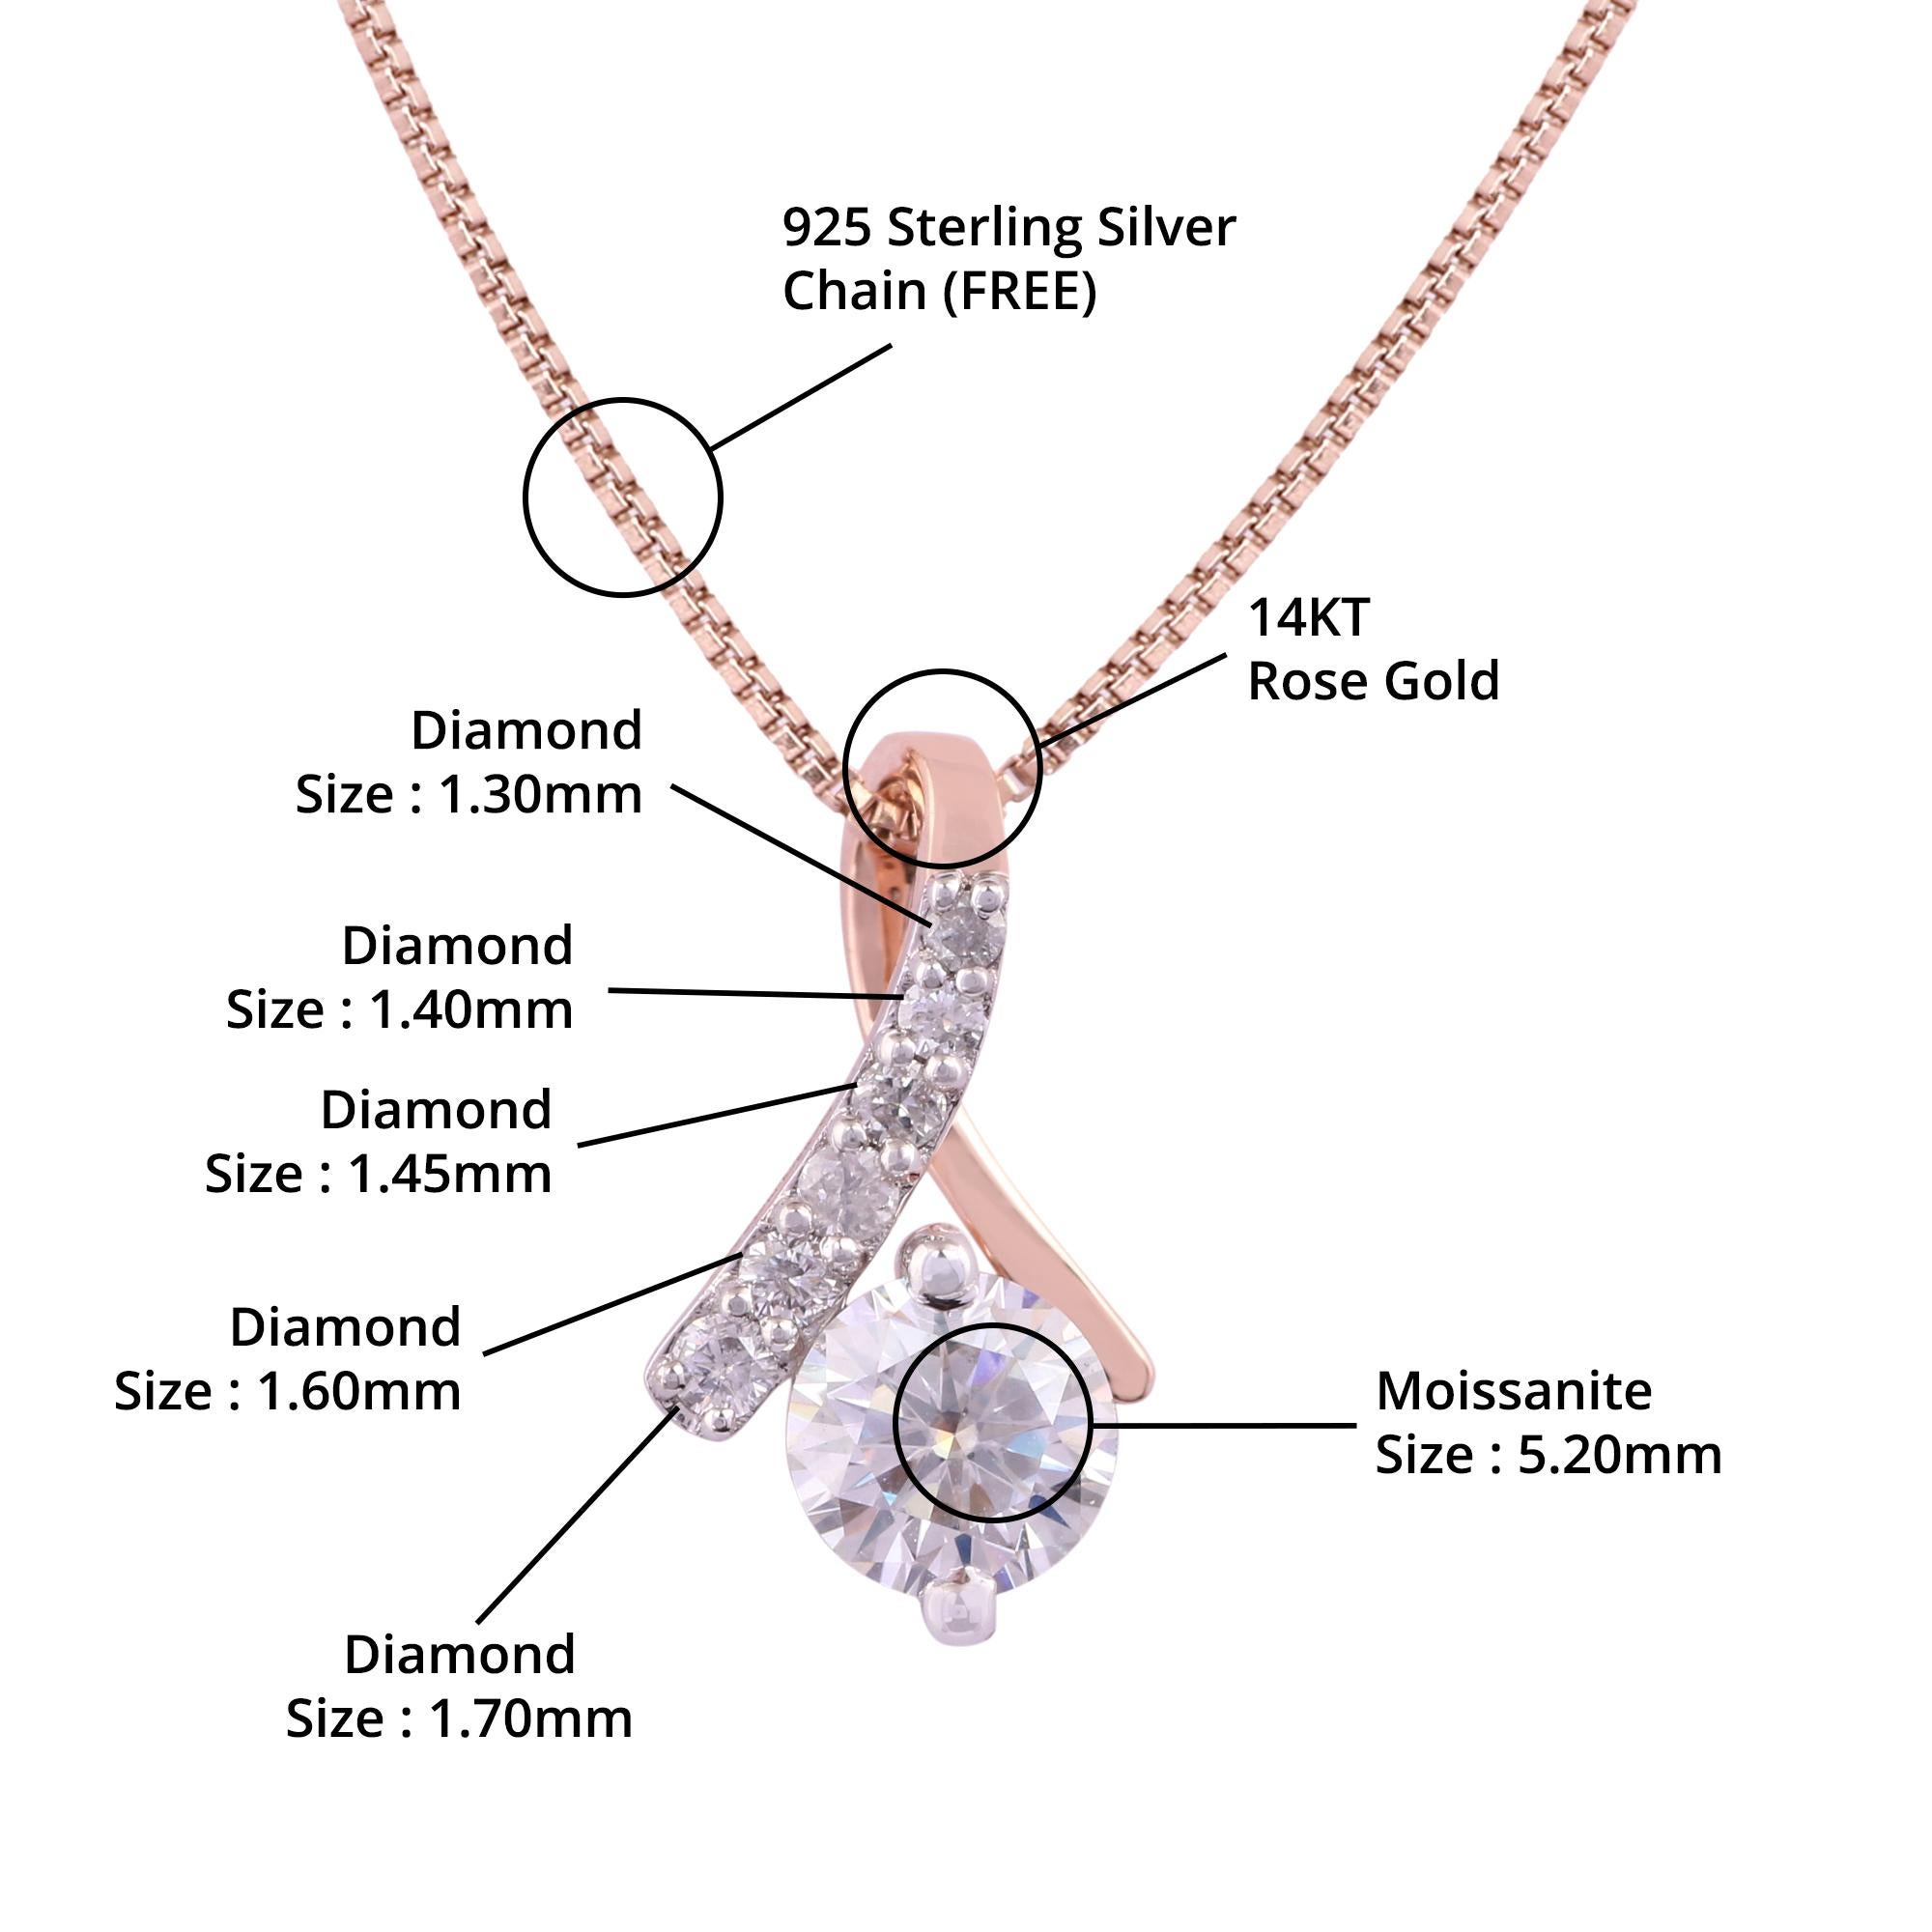 Item details:-

✦ SKU:- JPD00171RRR

✦ Material :- Gold

✦ Metal Purity : 14K Rose Gold 

✦ Gemstone Specification:- 
✧ Clear Diamond Round (l1/H1) - 1.30 mm - 1 Pc
✧ Clear Diamond Round (l1/H1) - 1.40 mm - 1 Pc
✧ Clear Diamond Round (l1/H1) - 1.45